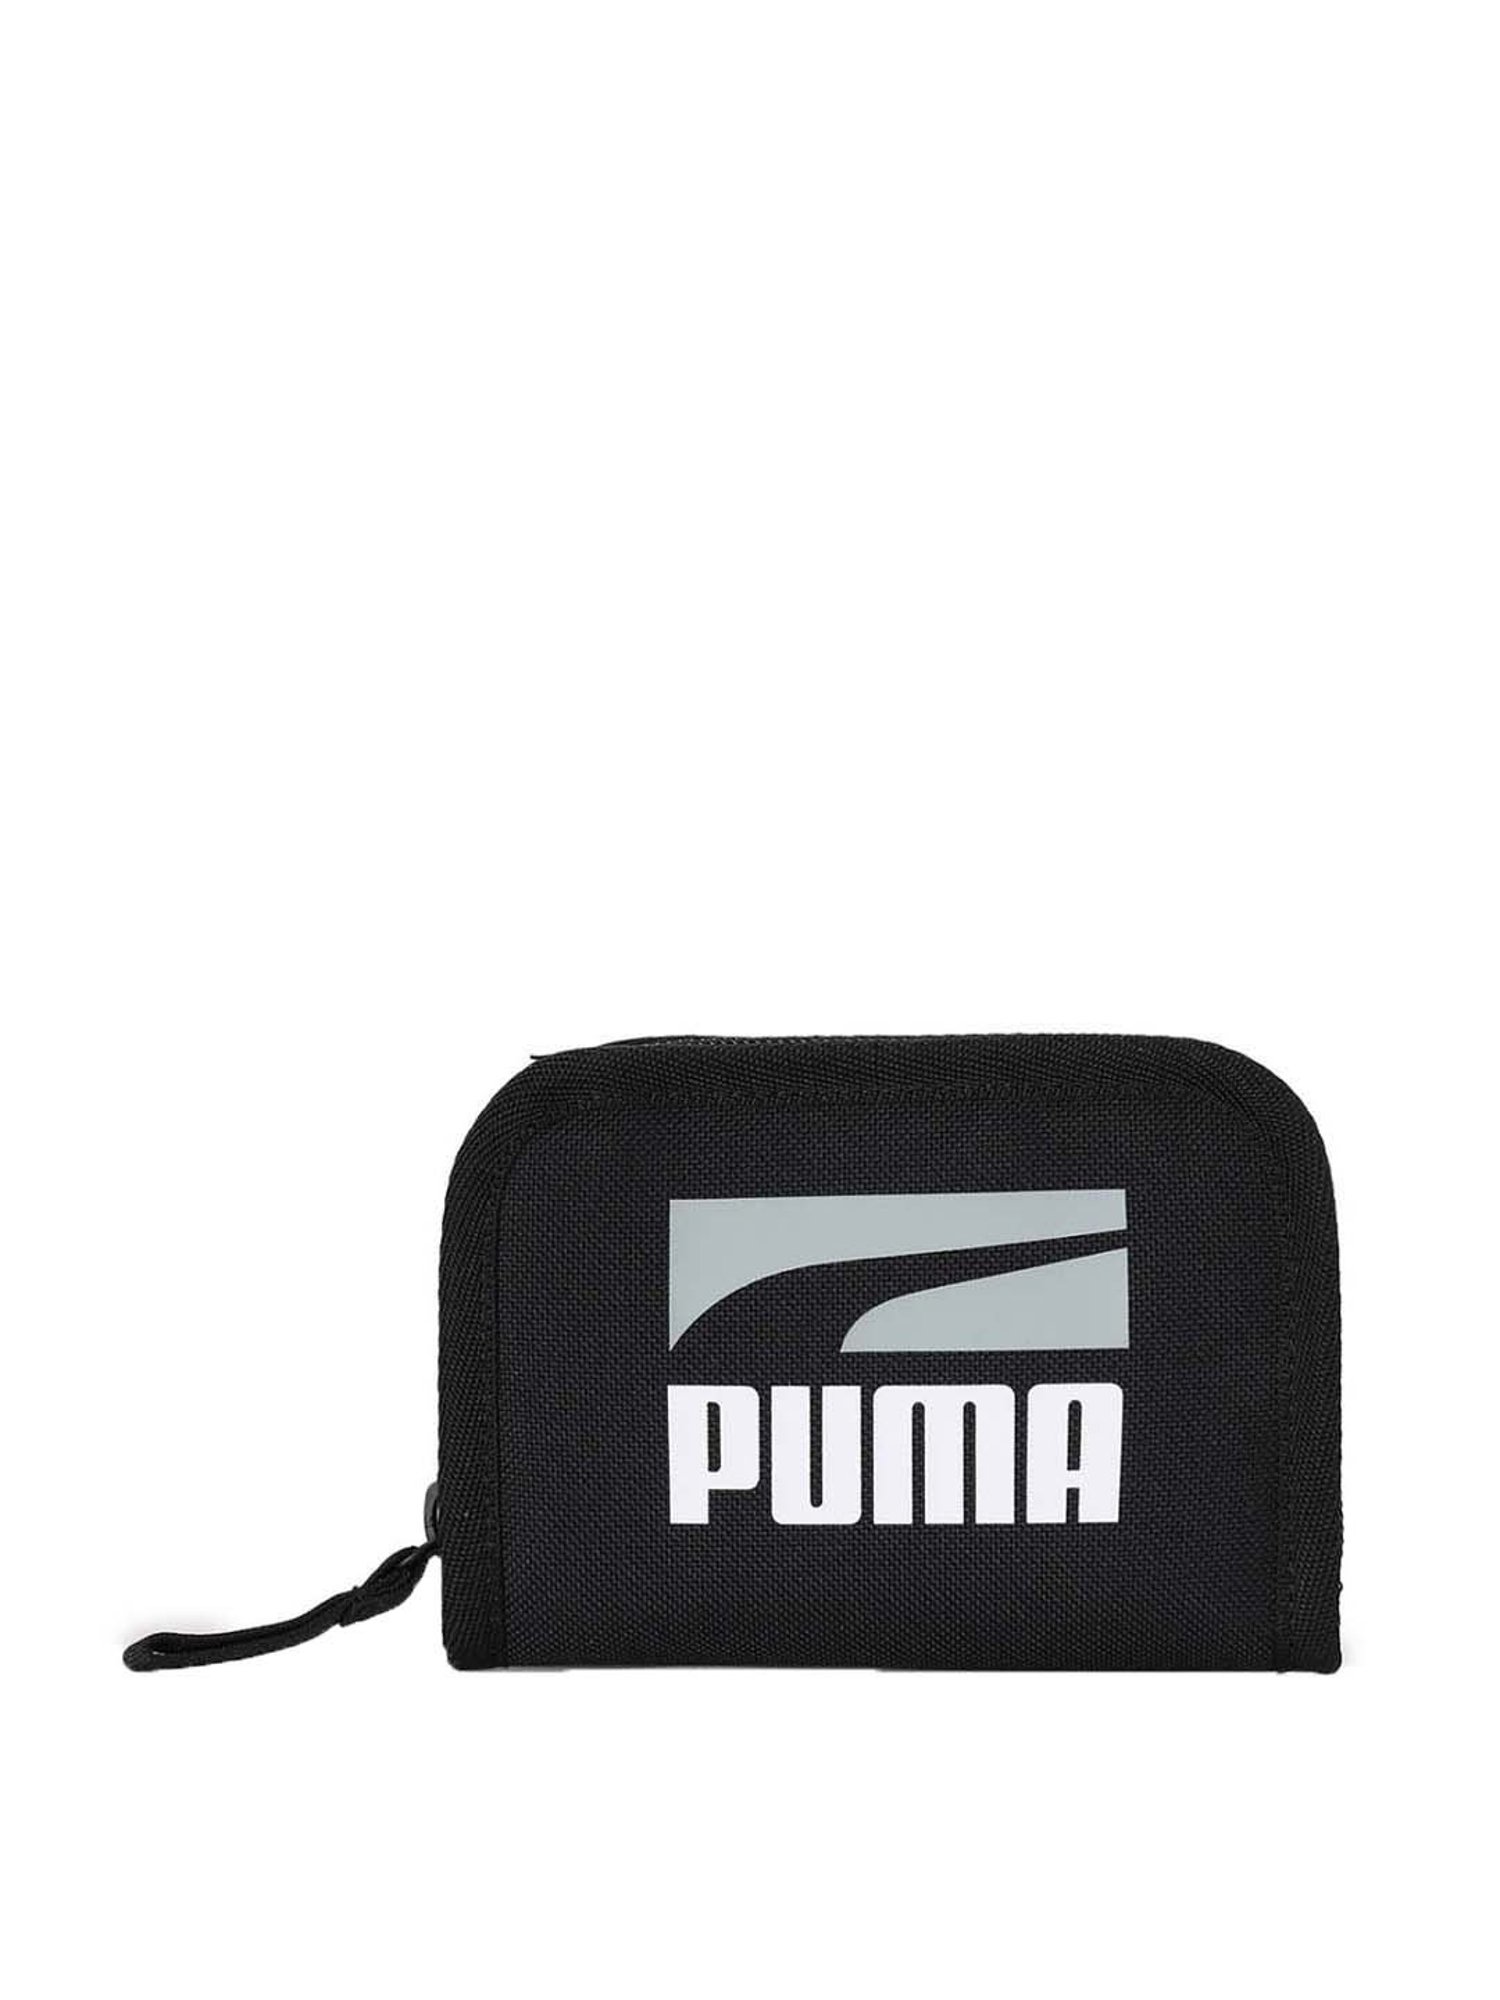 Buy Puma Bmw M Ls Wallet In Black online